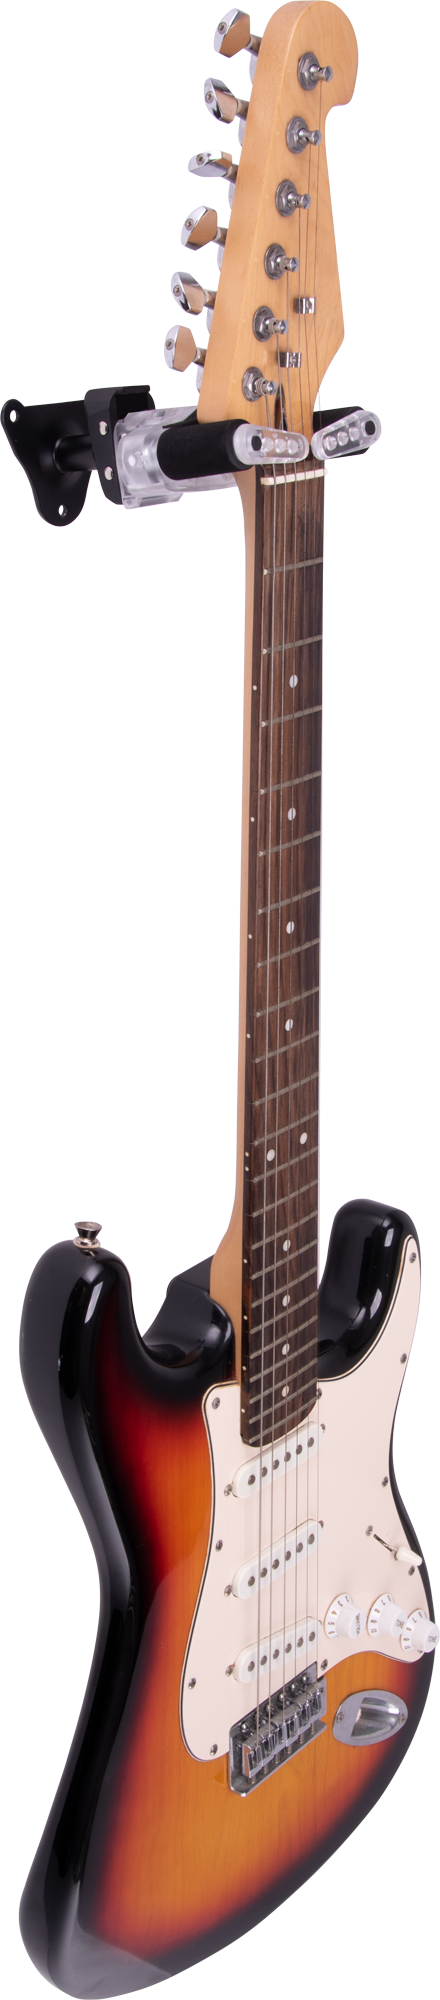 HERCULES HCGSP-39WBLT Gitarrenwandhalter